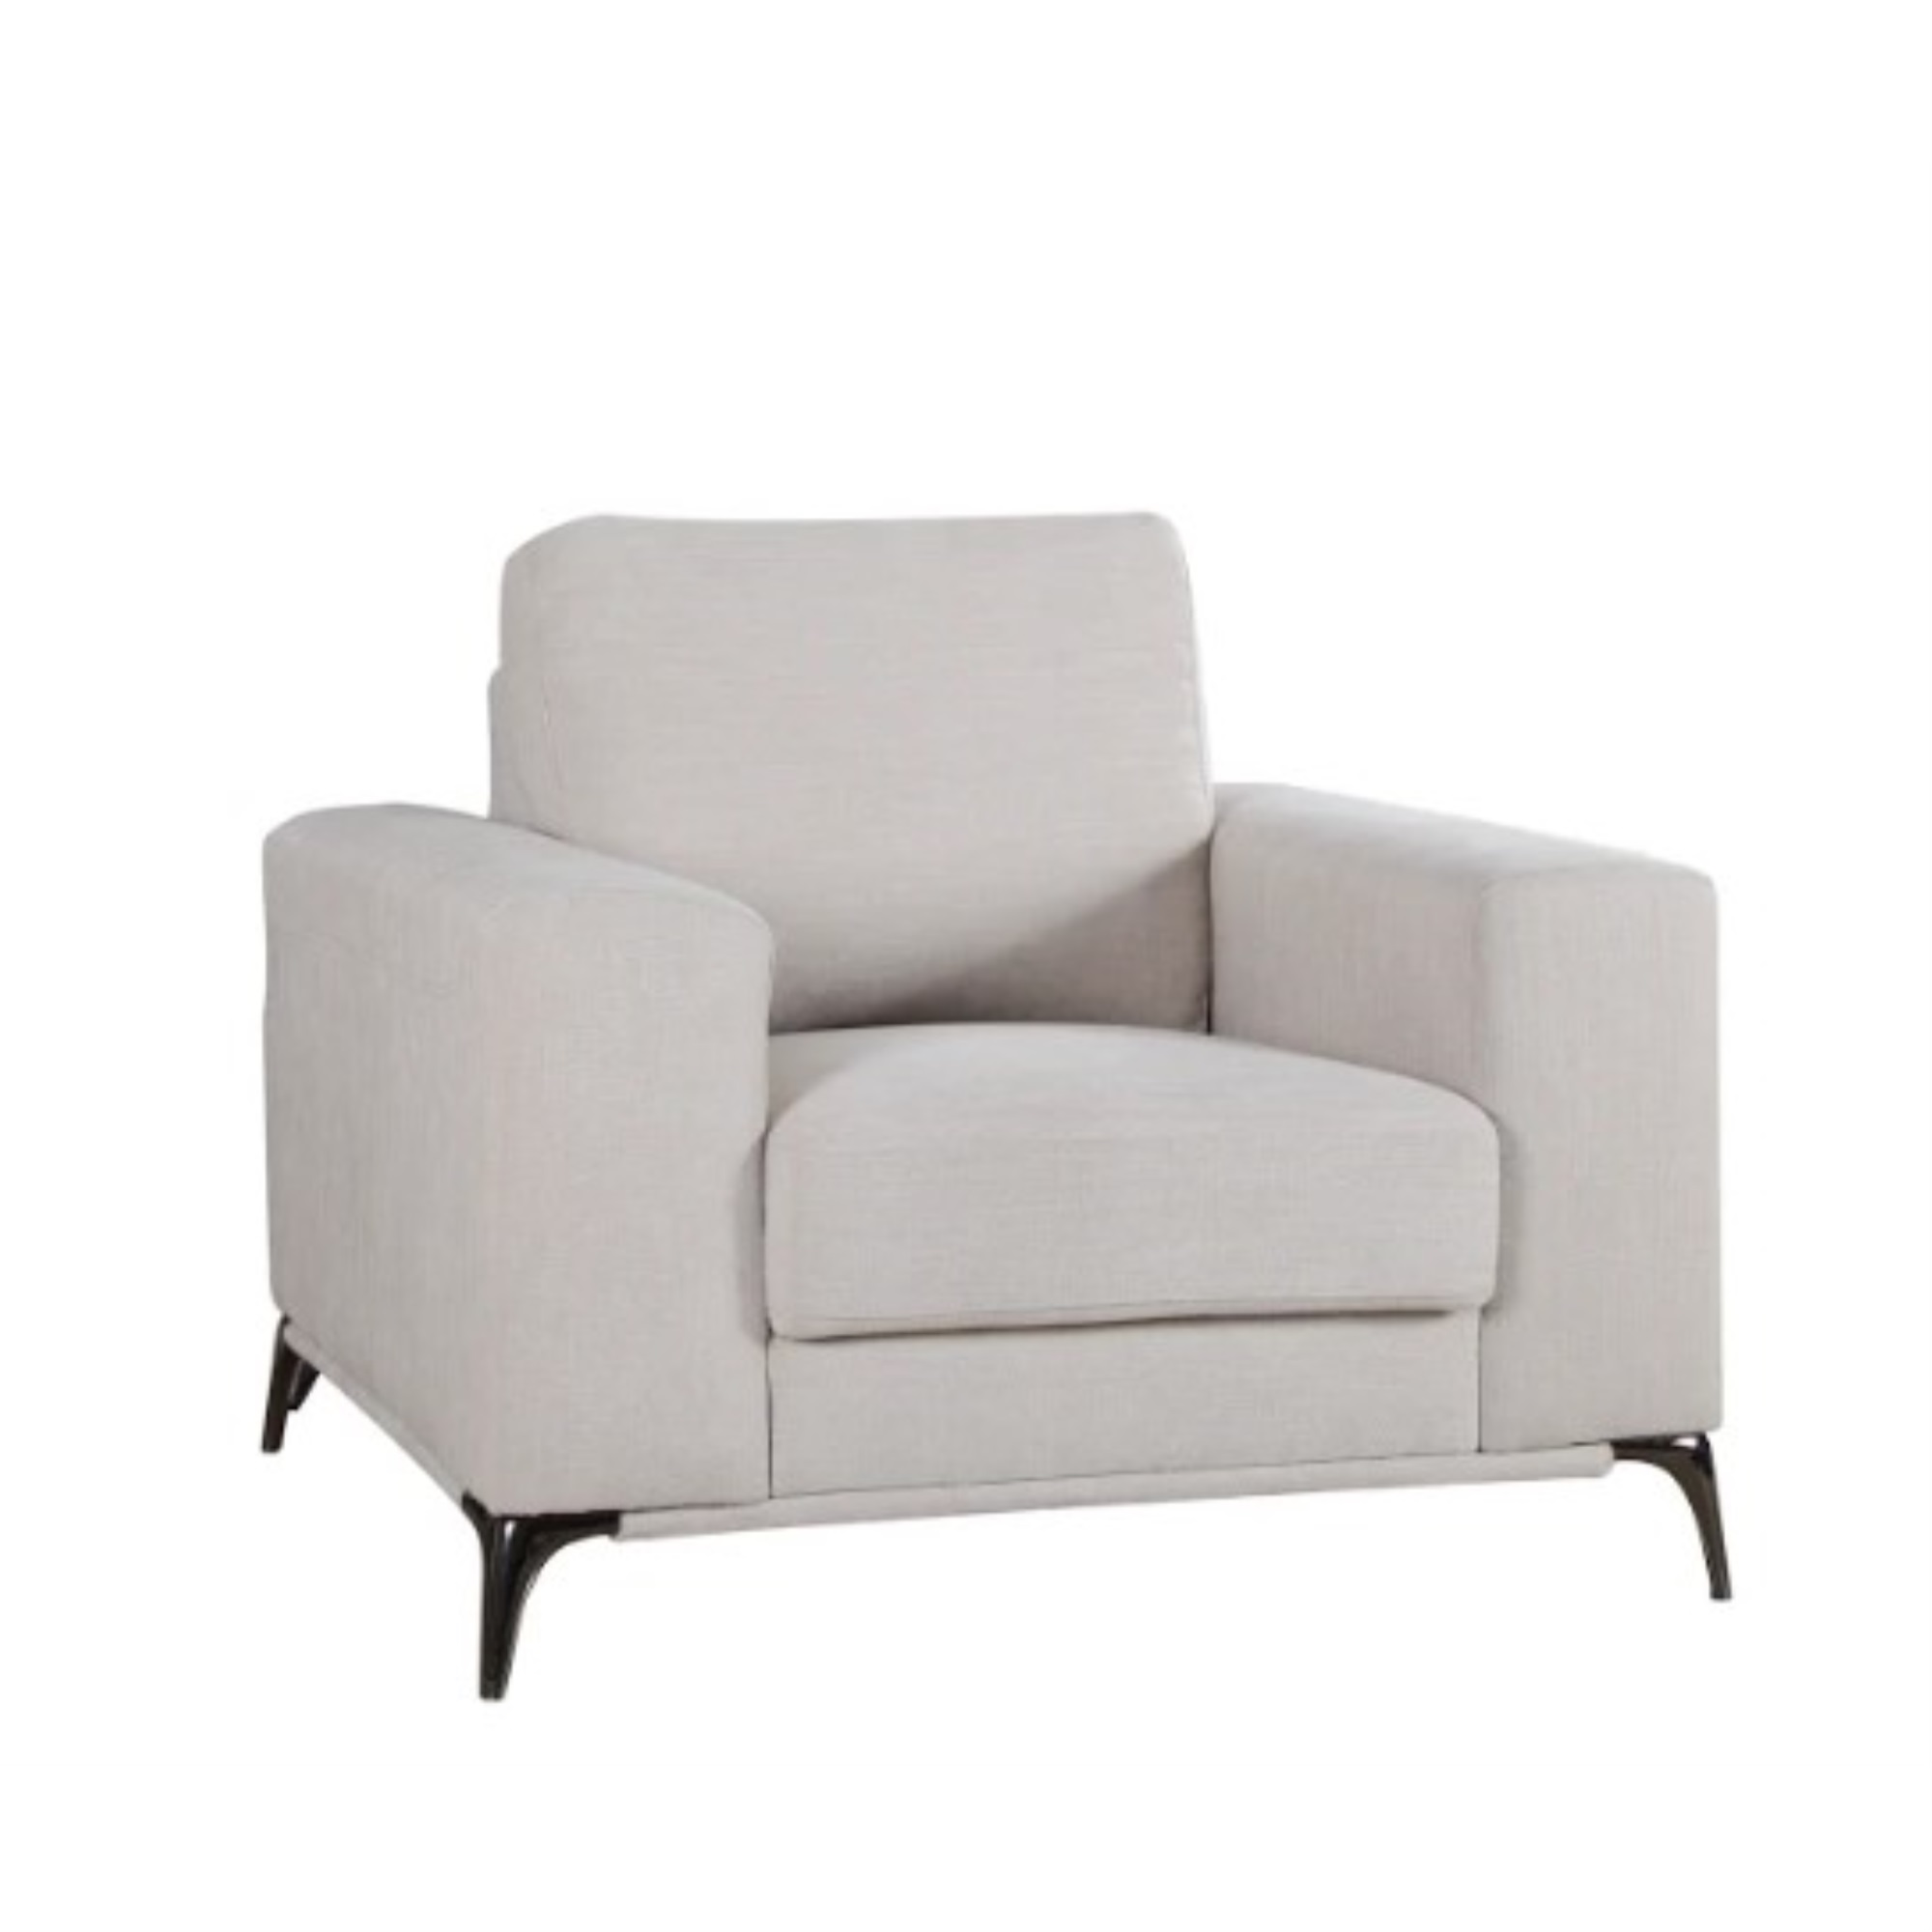 44" X 39" X 35" Beige Polyester Chair